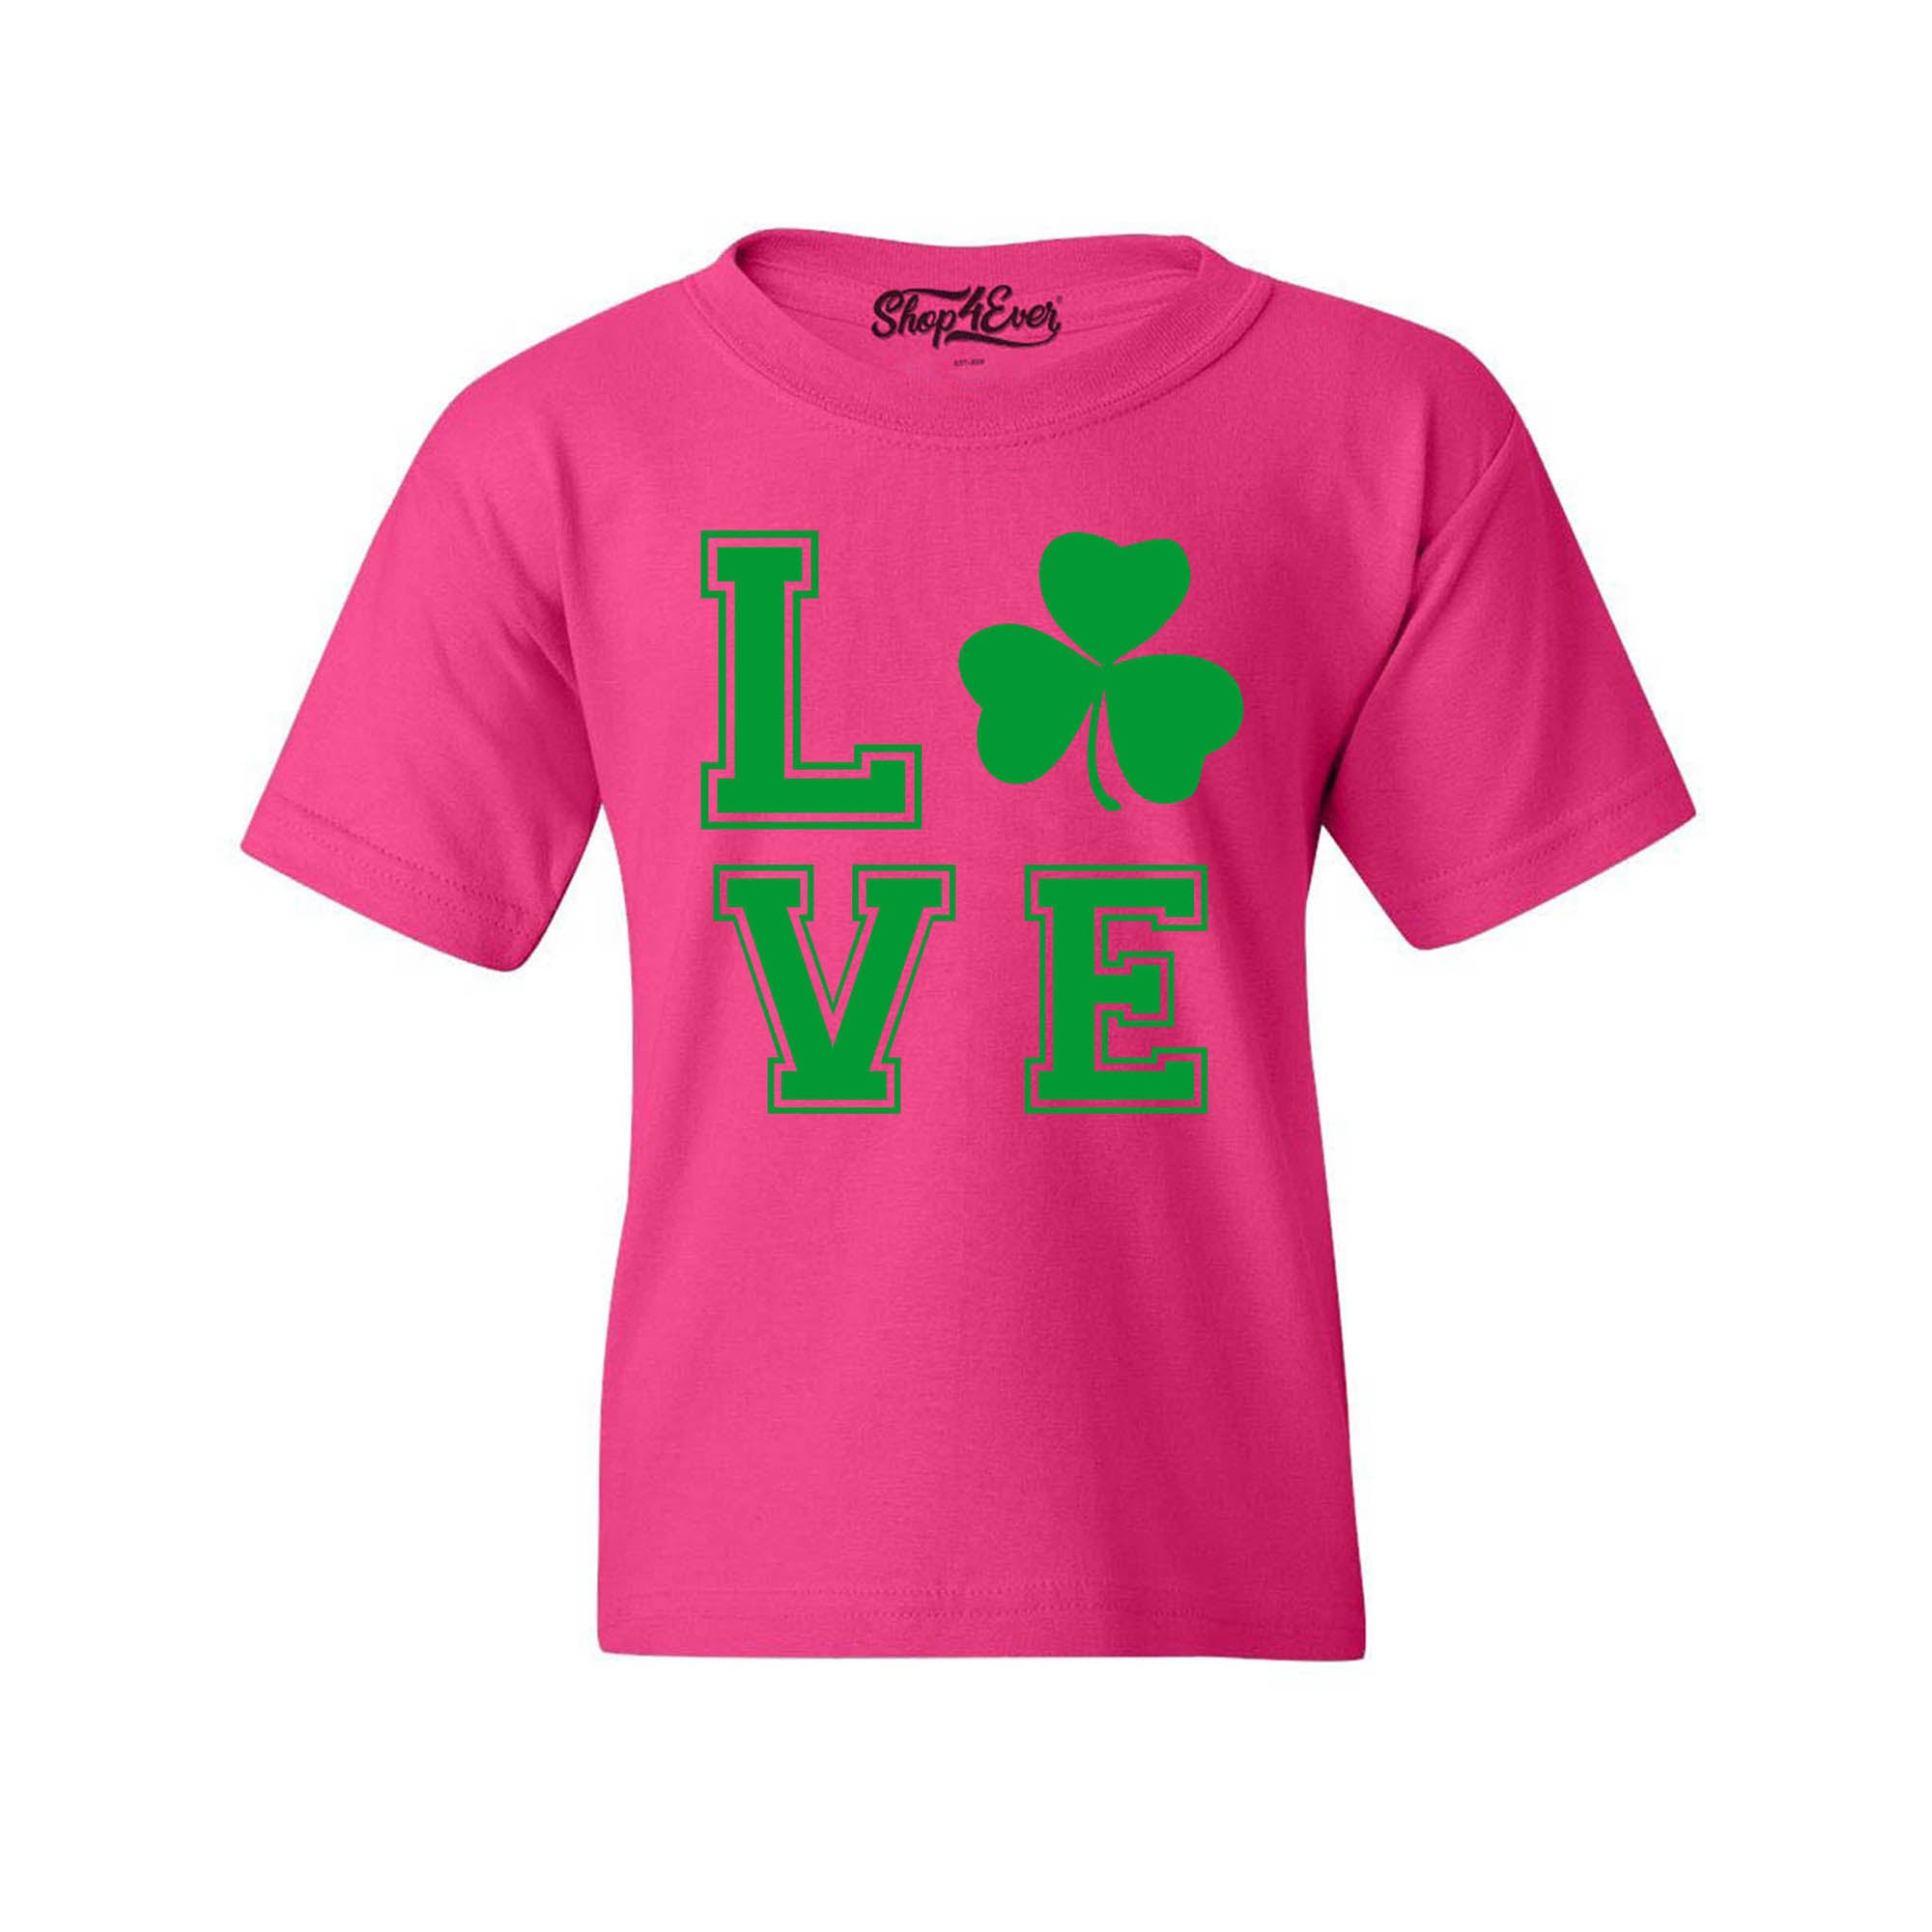 Green Shamrock Love Youth's T-Shirt St. Patricks Day Shirts